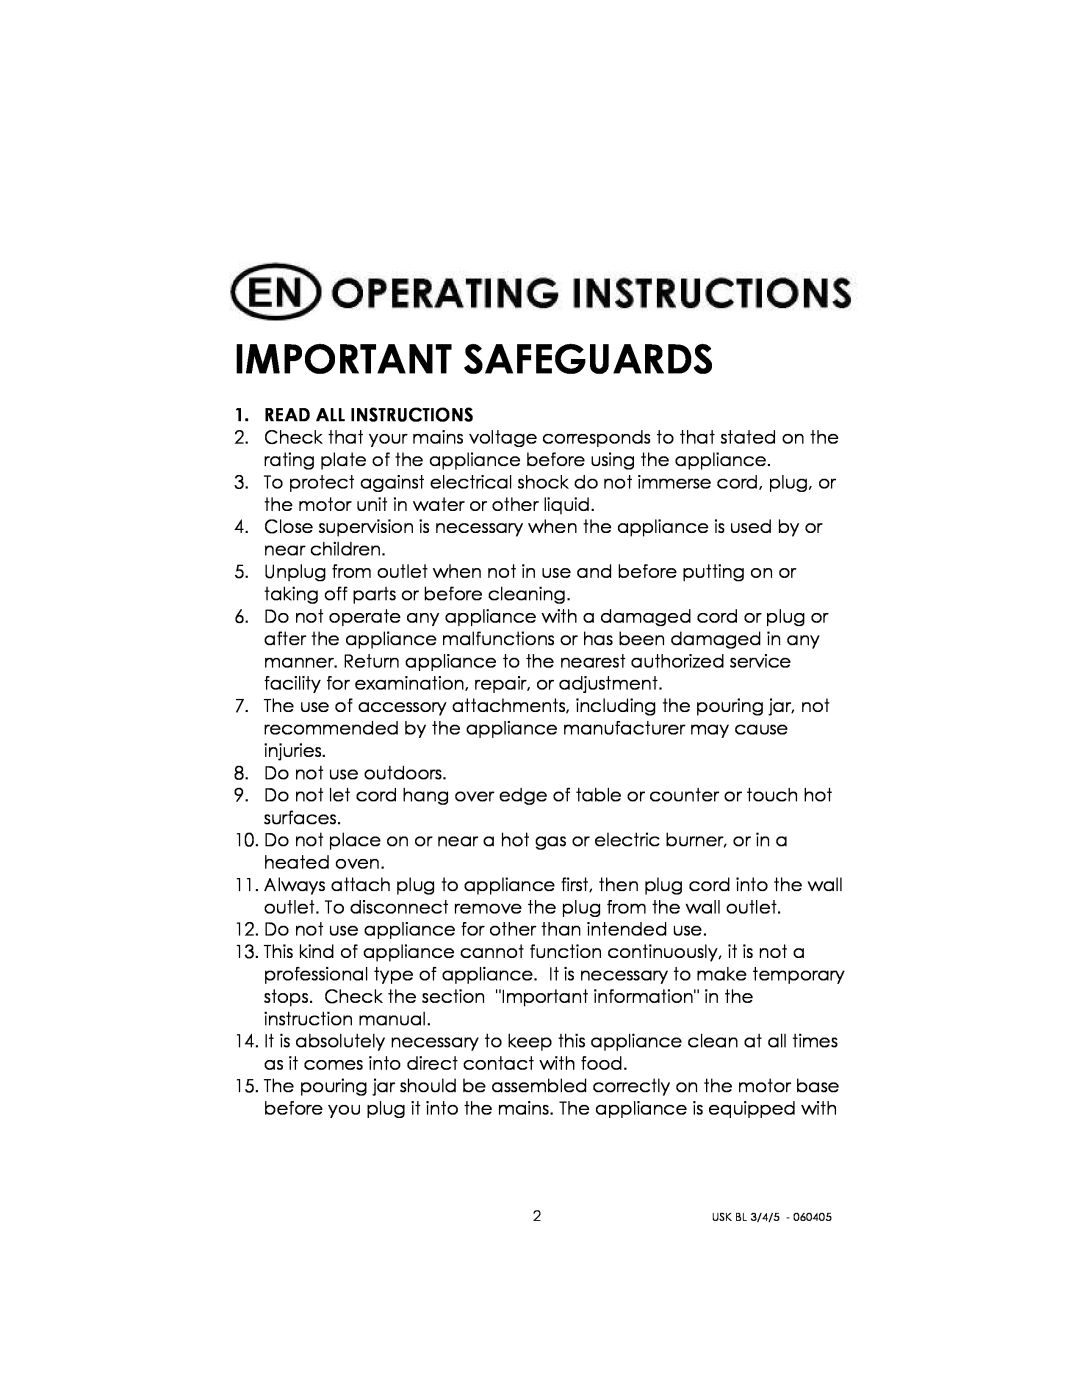 Kalorik USK BL 3/4/5 manual Important Safeguards 